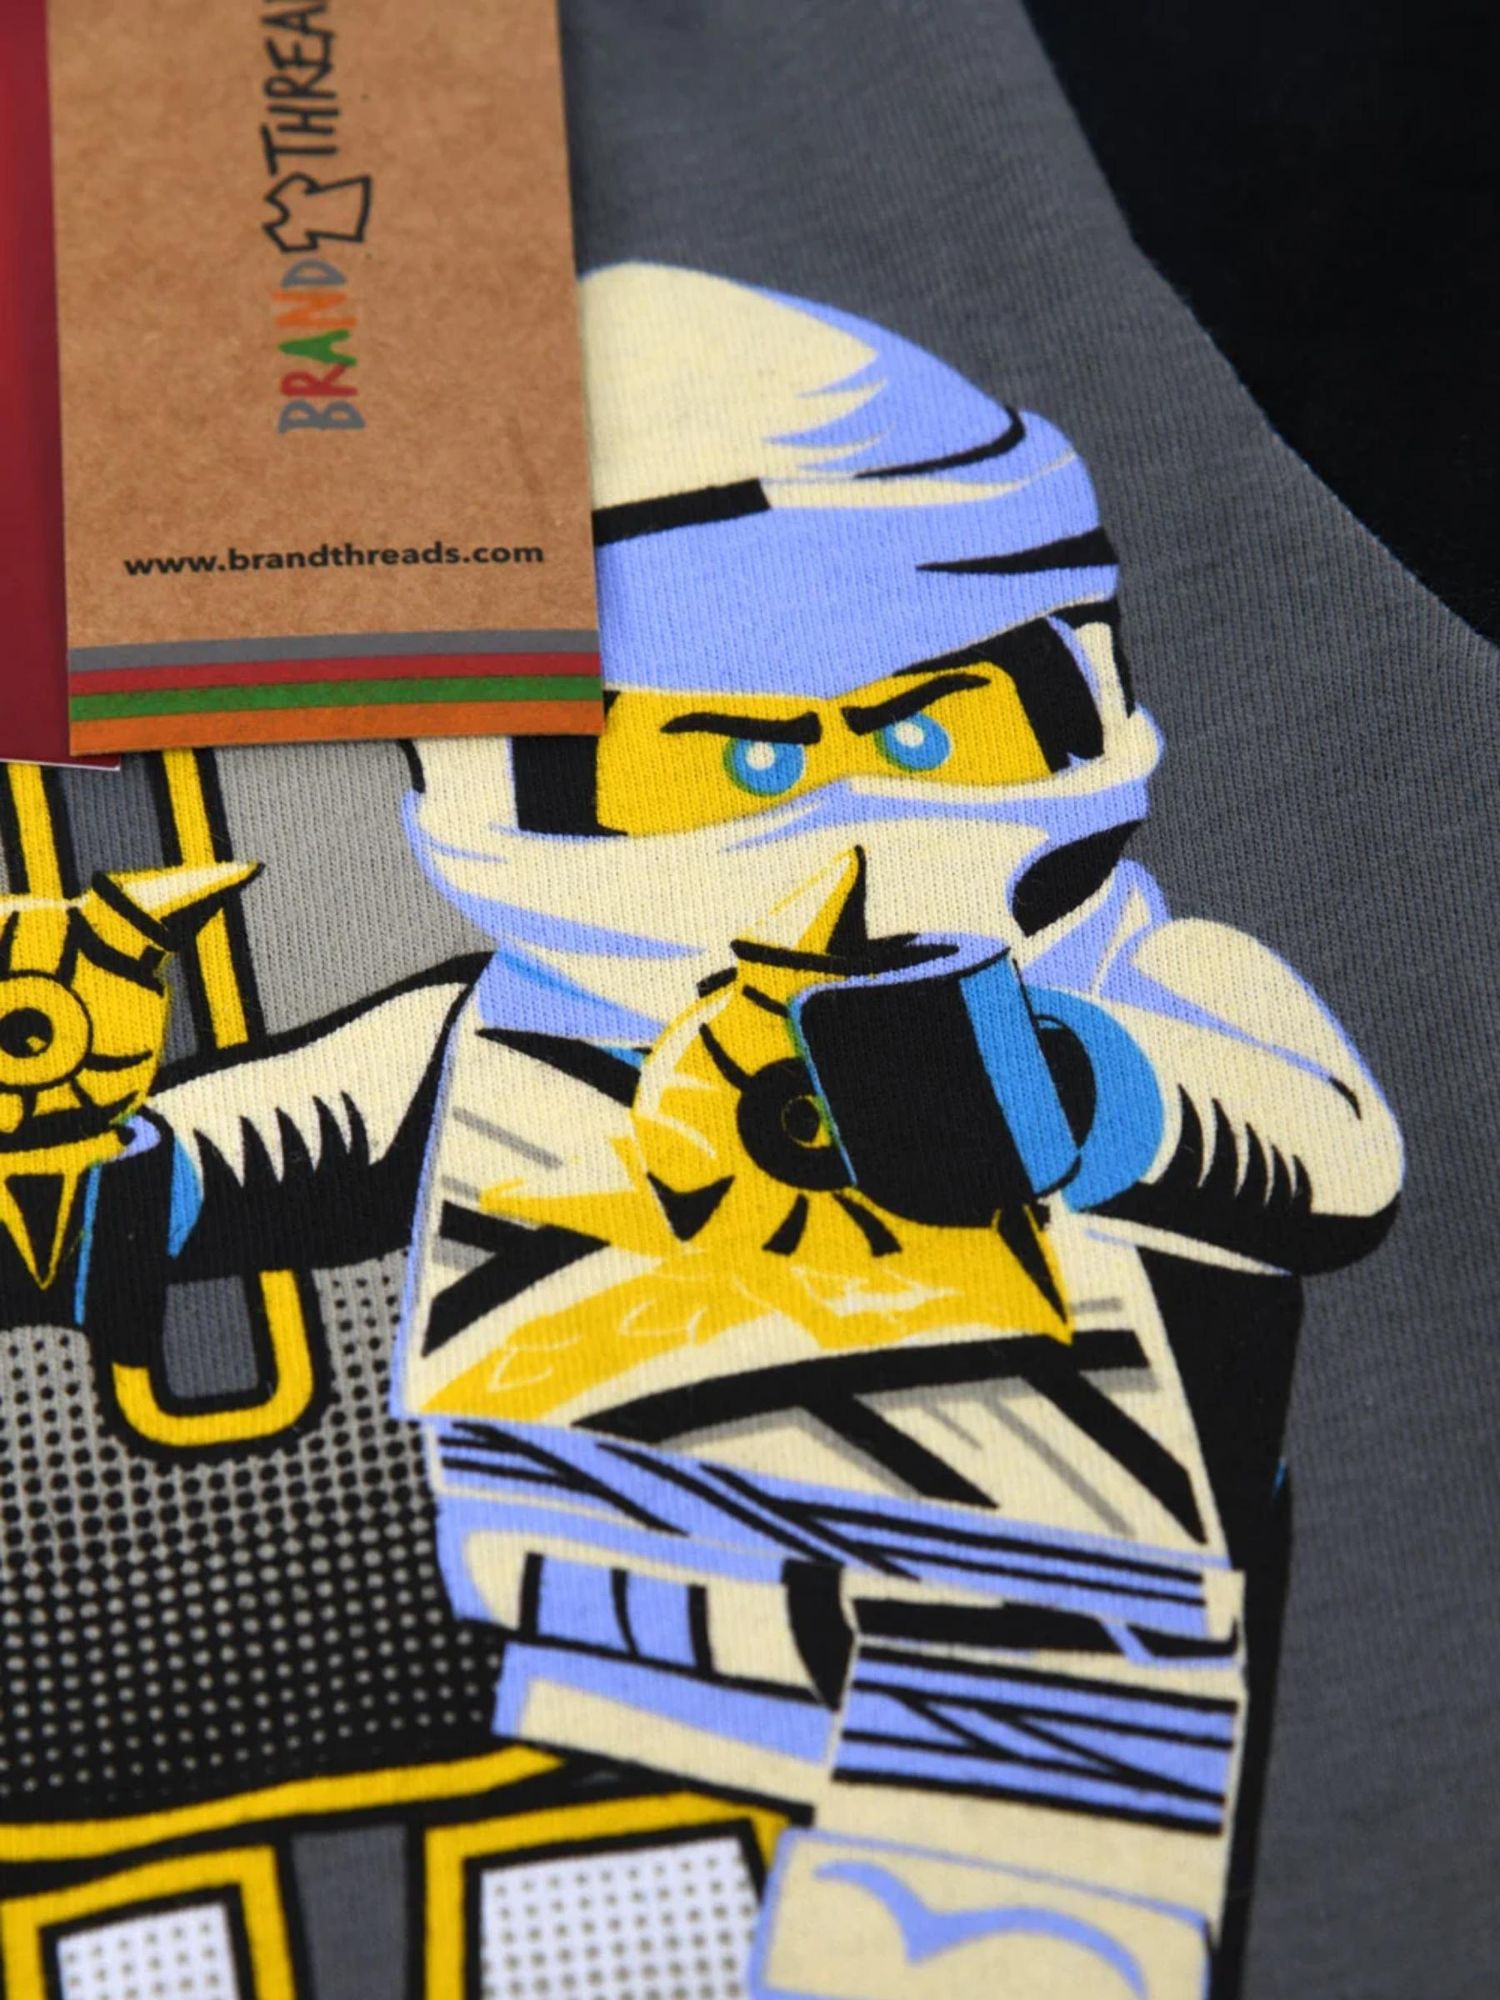 Brand Threads Kids' LEGO Ninjago Pyjama Set, Grey, 4-5 years